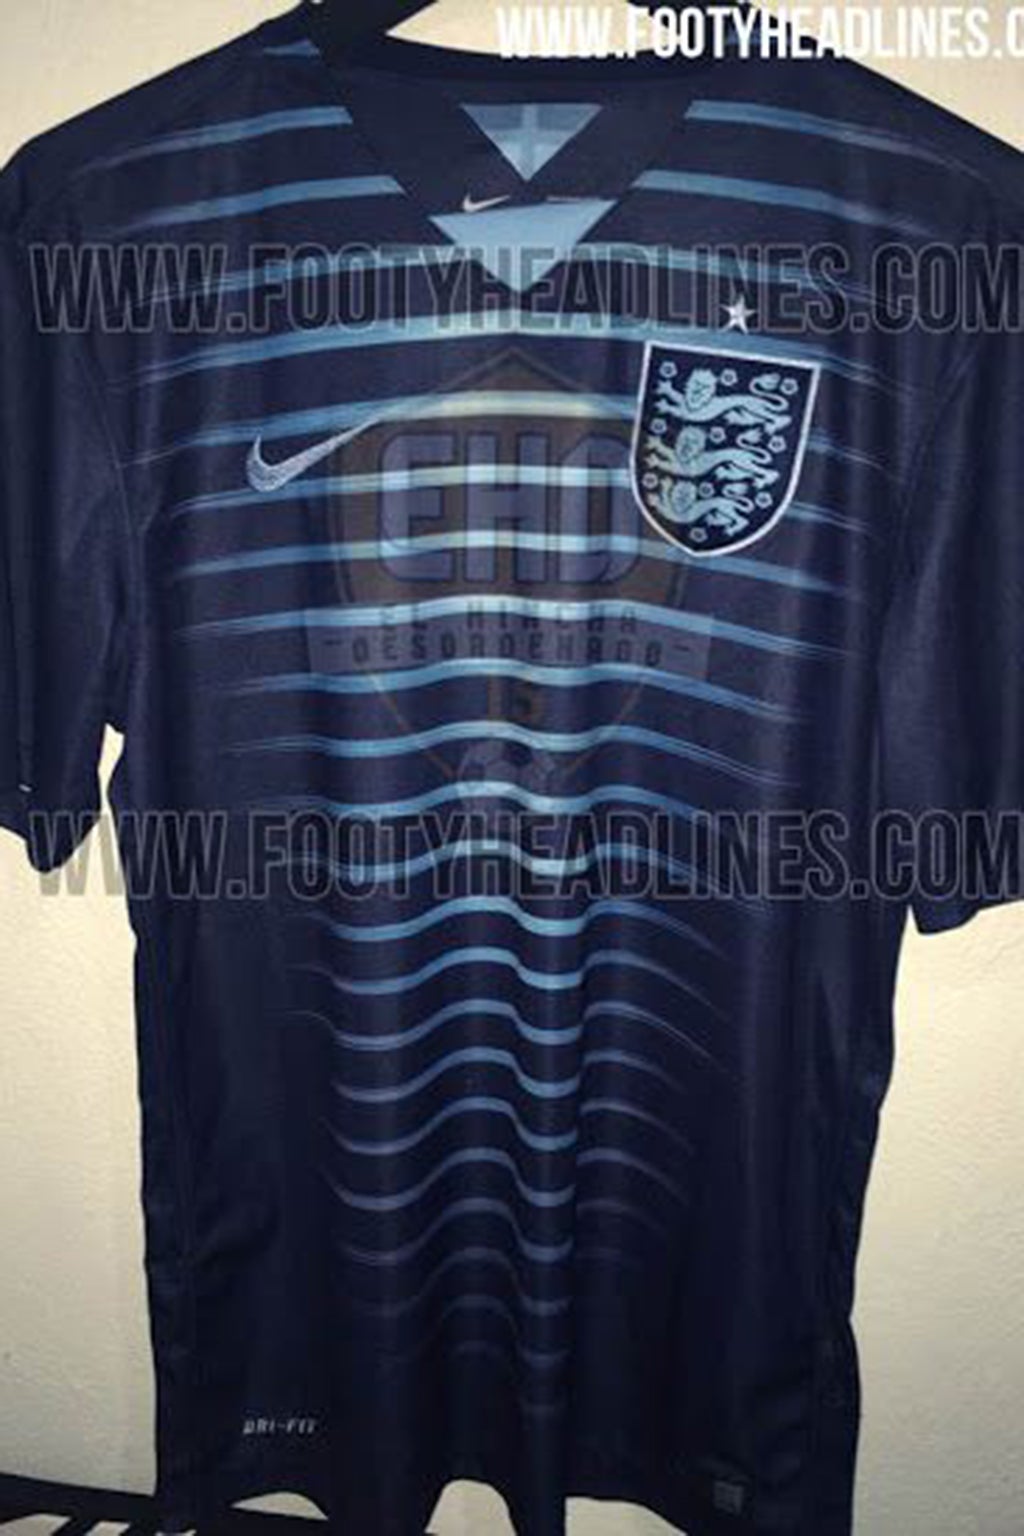 The leaked England shirt